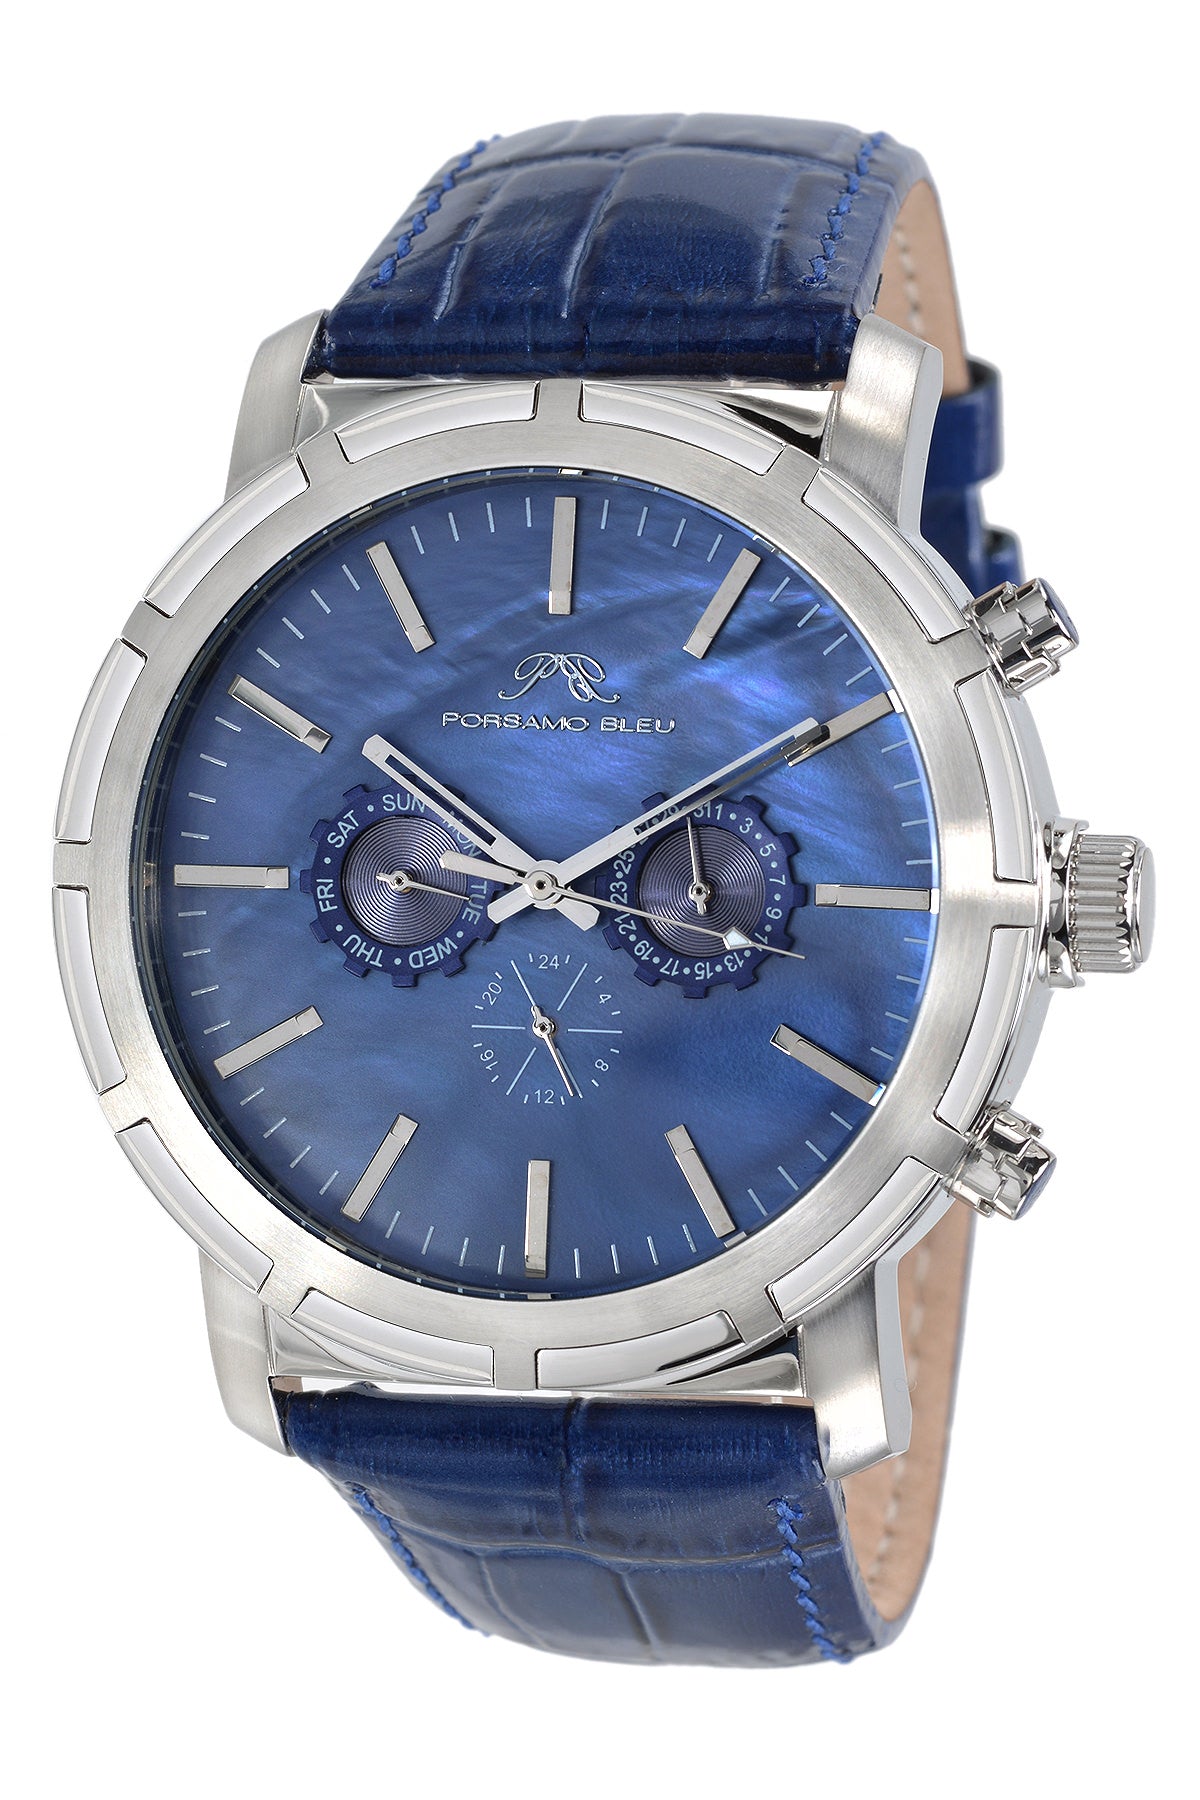 Porsamo Bleu NYC luxury men's watch, genuine leather band, silver, blue 056ANYL